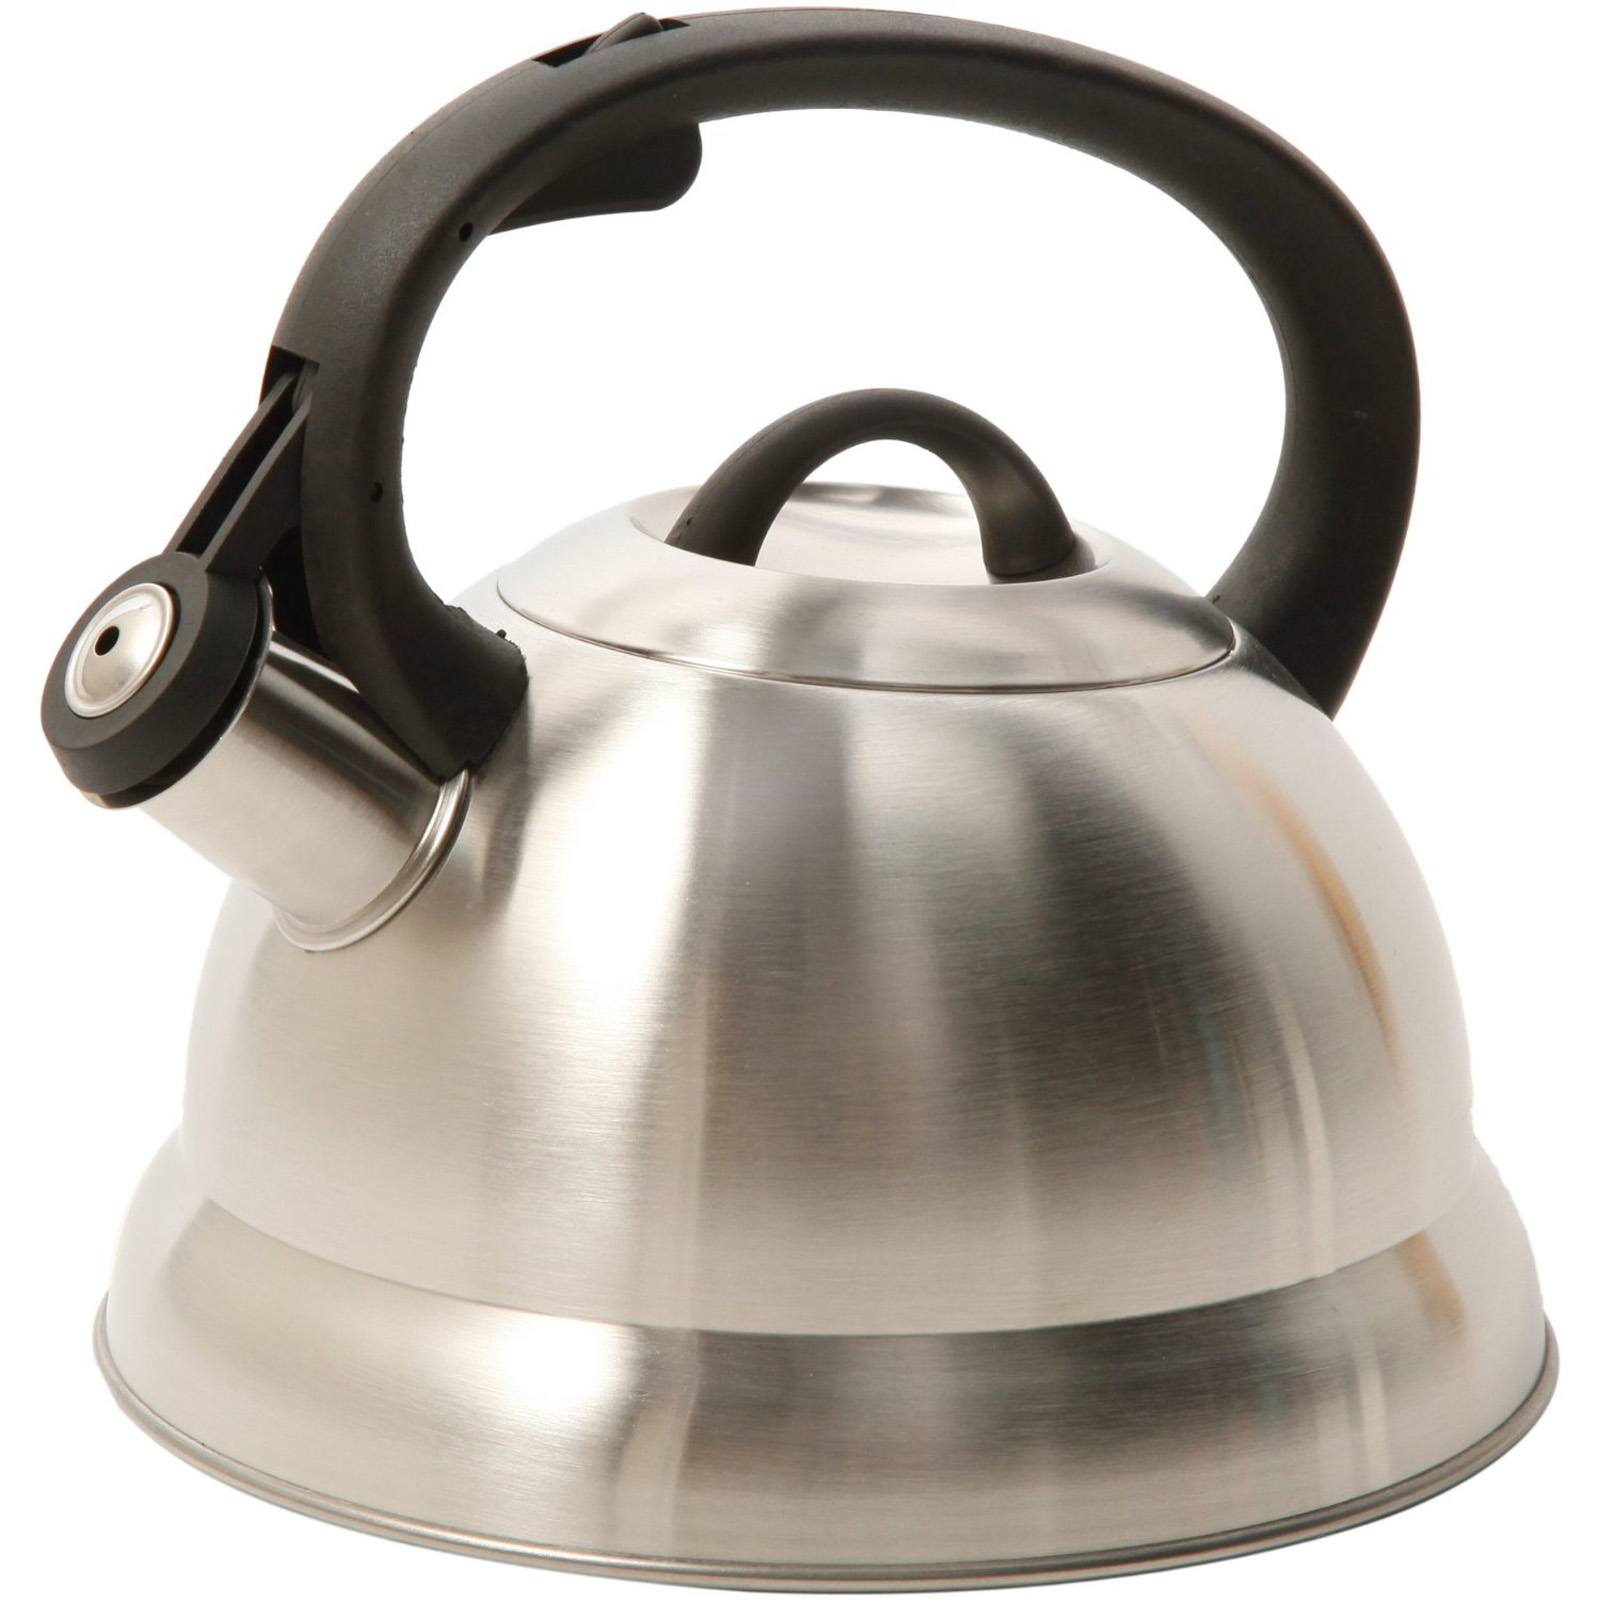 Mr. Coffee 91407.02 Flintshire 1.75 Qt. Stainless Steel Whistling Tea Kettle